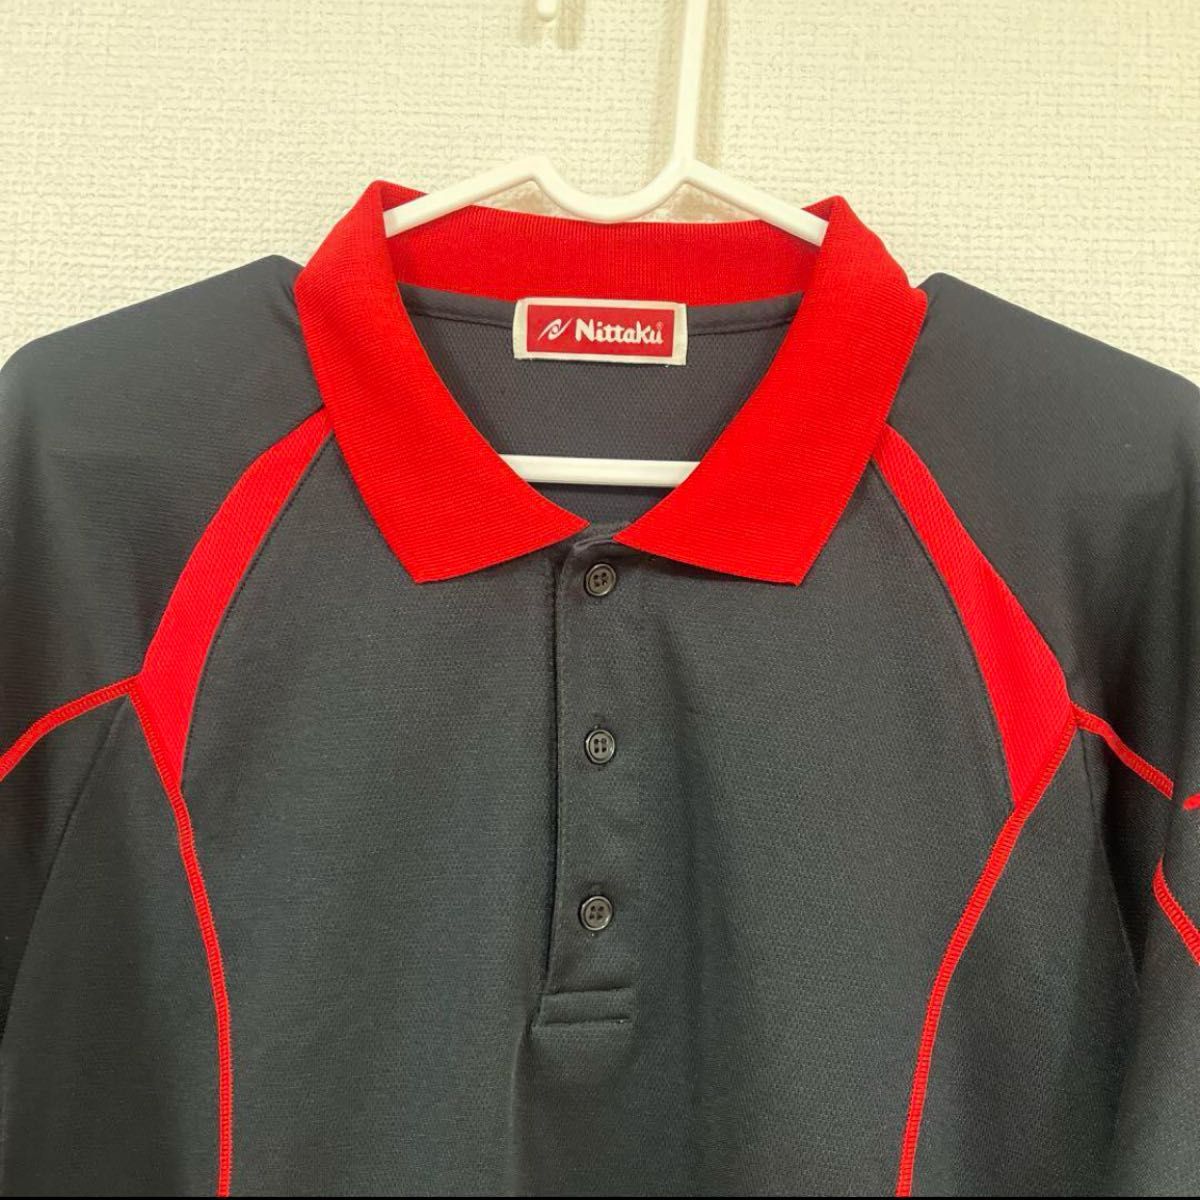 【1147】nittaku 卓球　バドミントンウェア 半袖ポロシャツ ゲームシャツ ゴルフウェア スポーツウエア ブラック シャツ